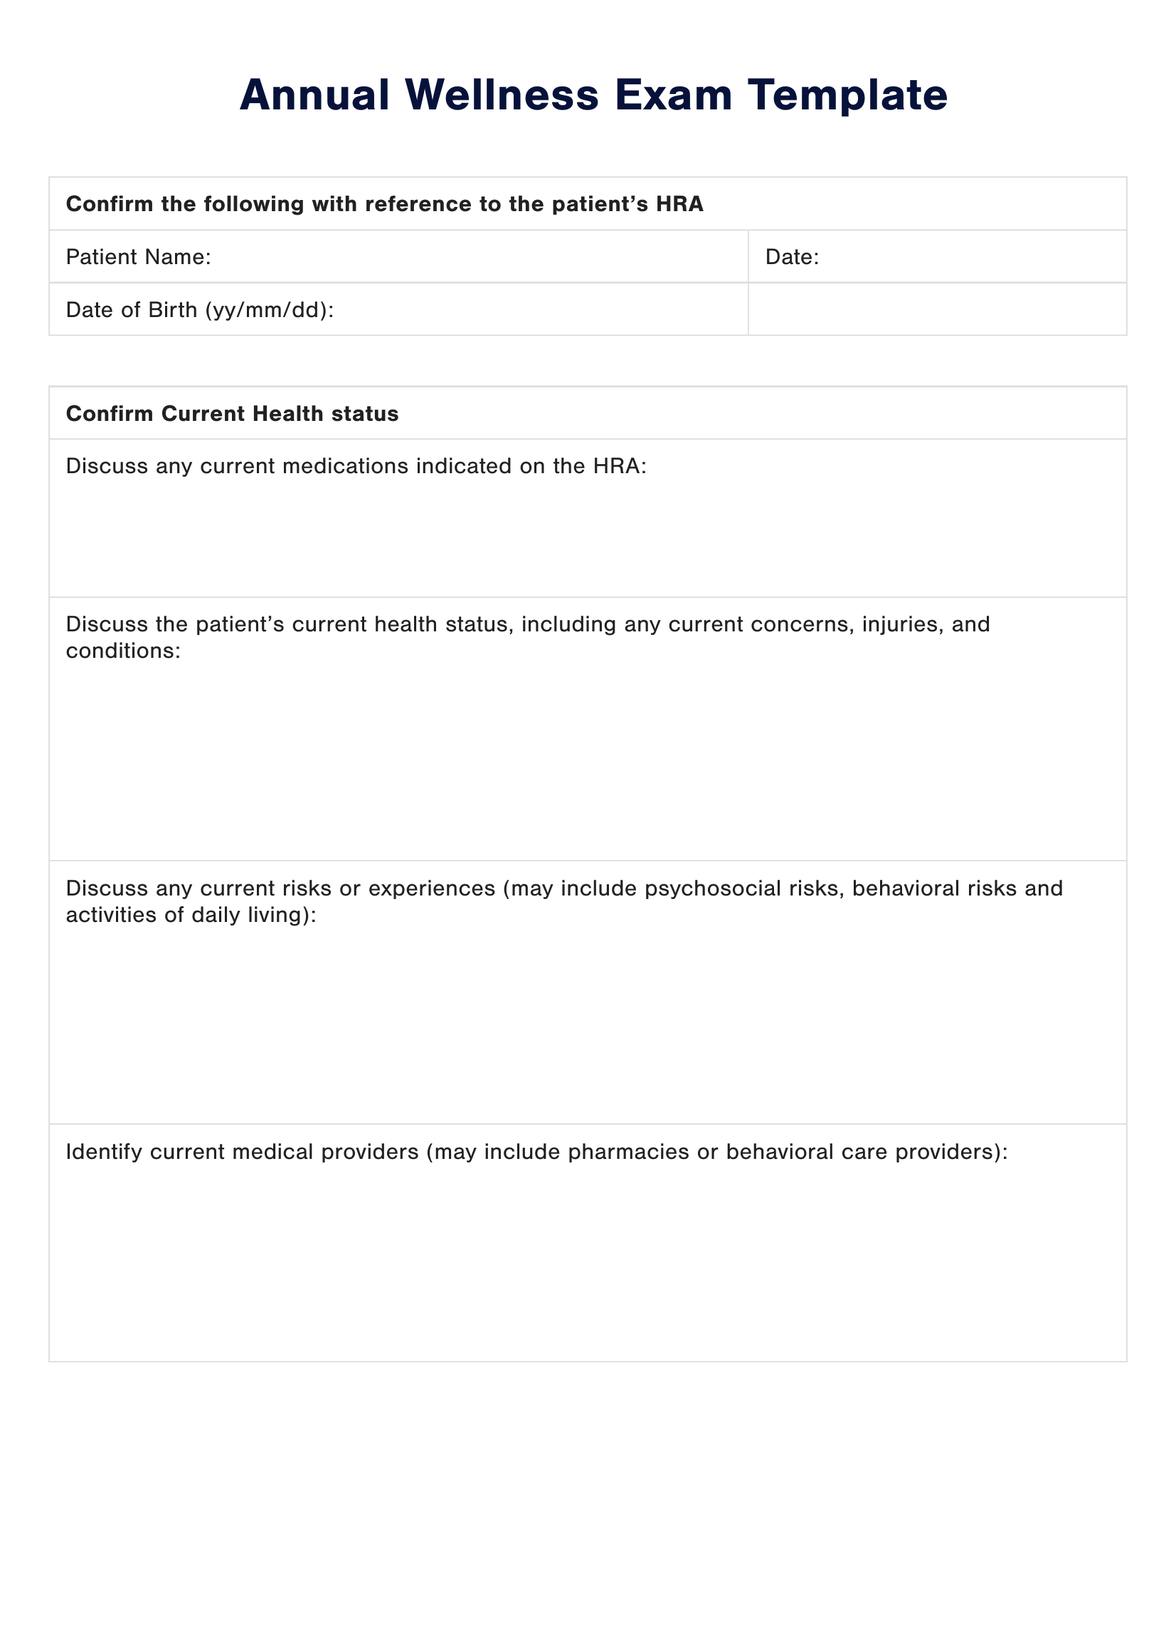 Annual Wellness Exam Template PDF Example